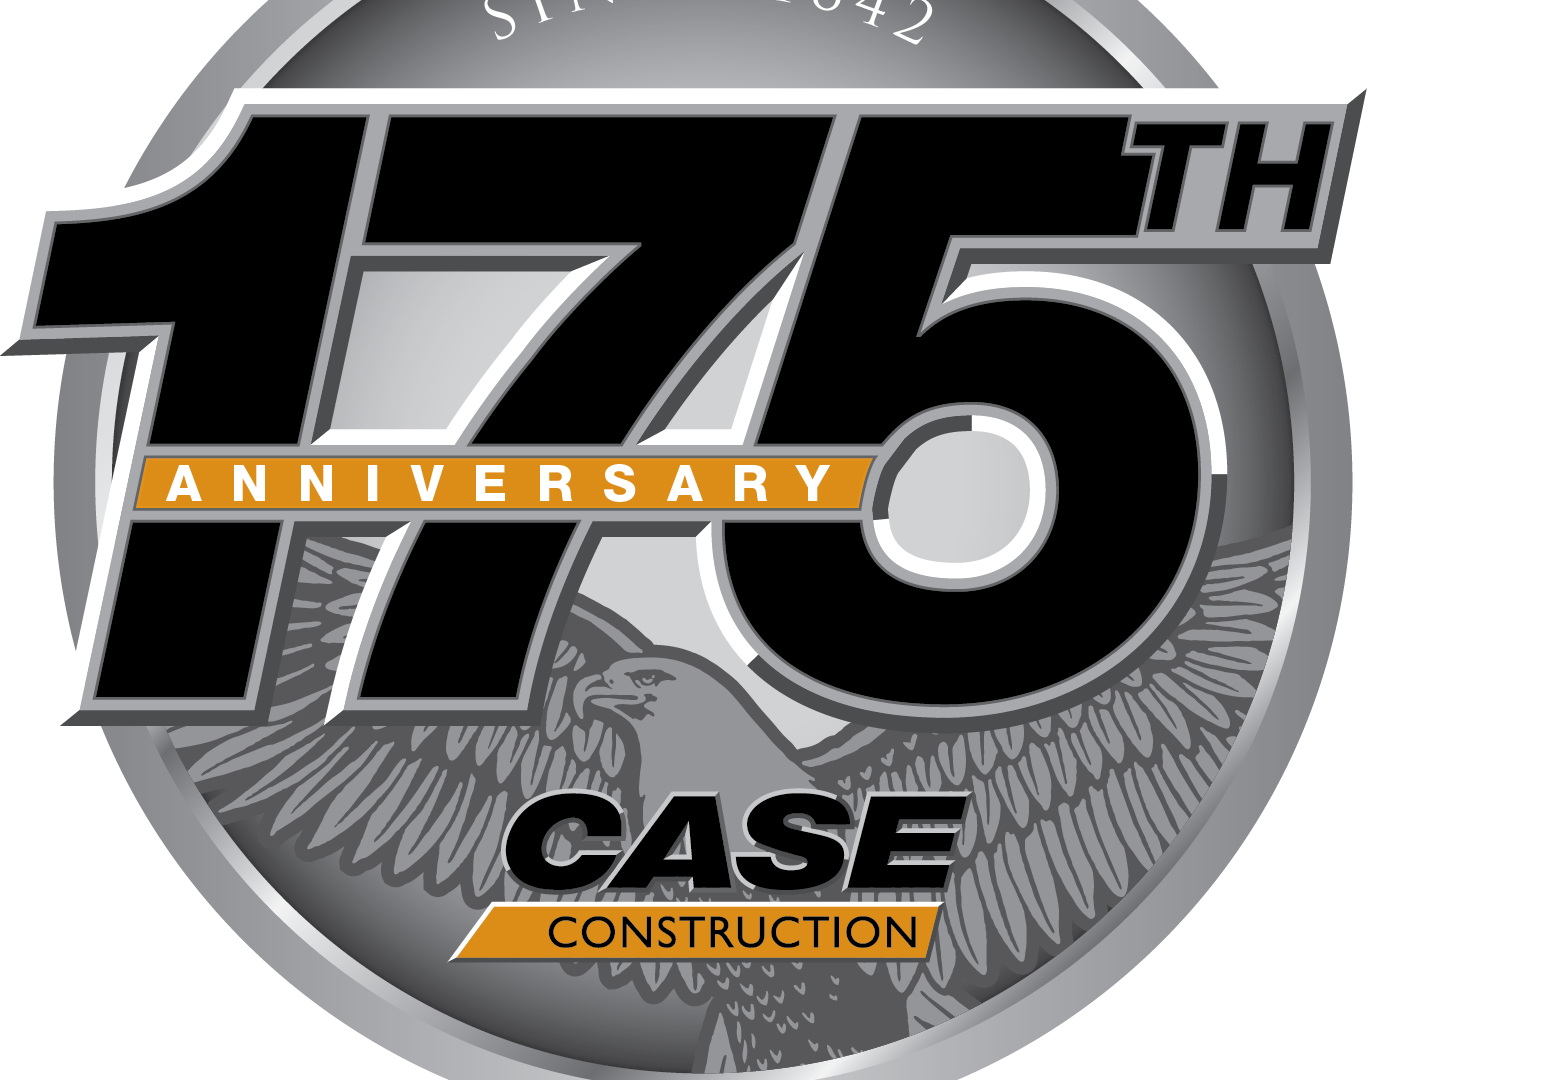 175th anniversary CASE logo